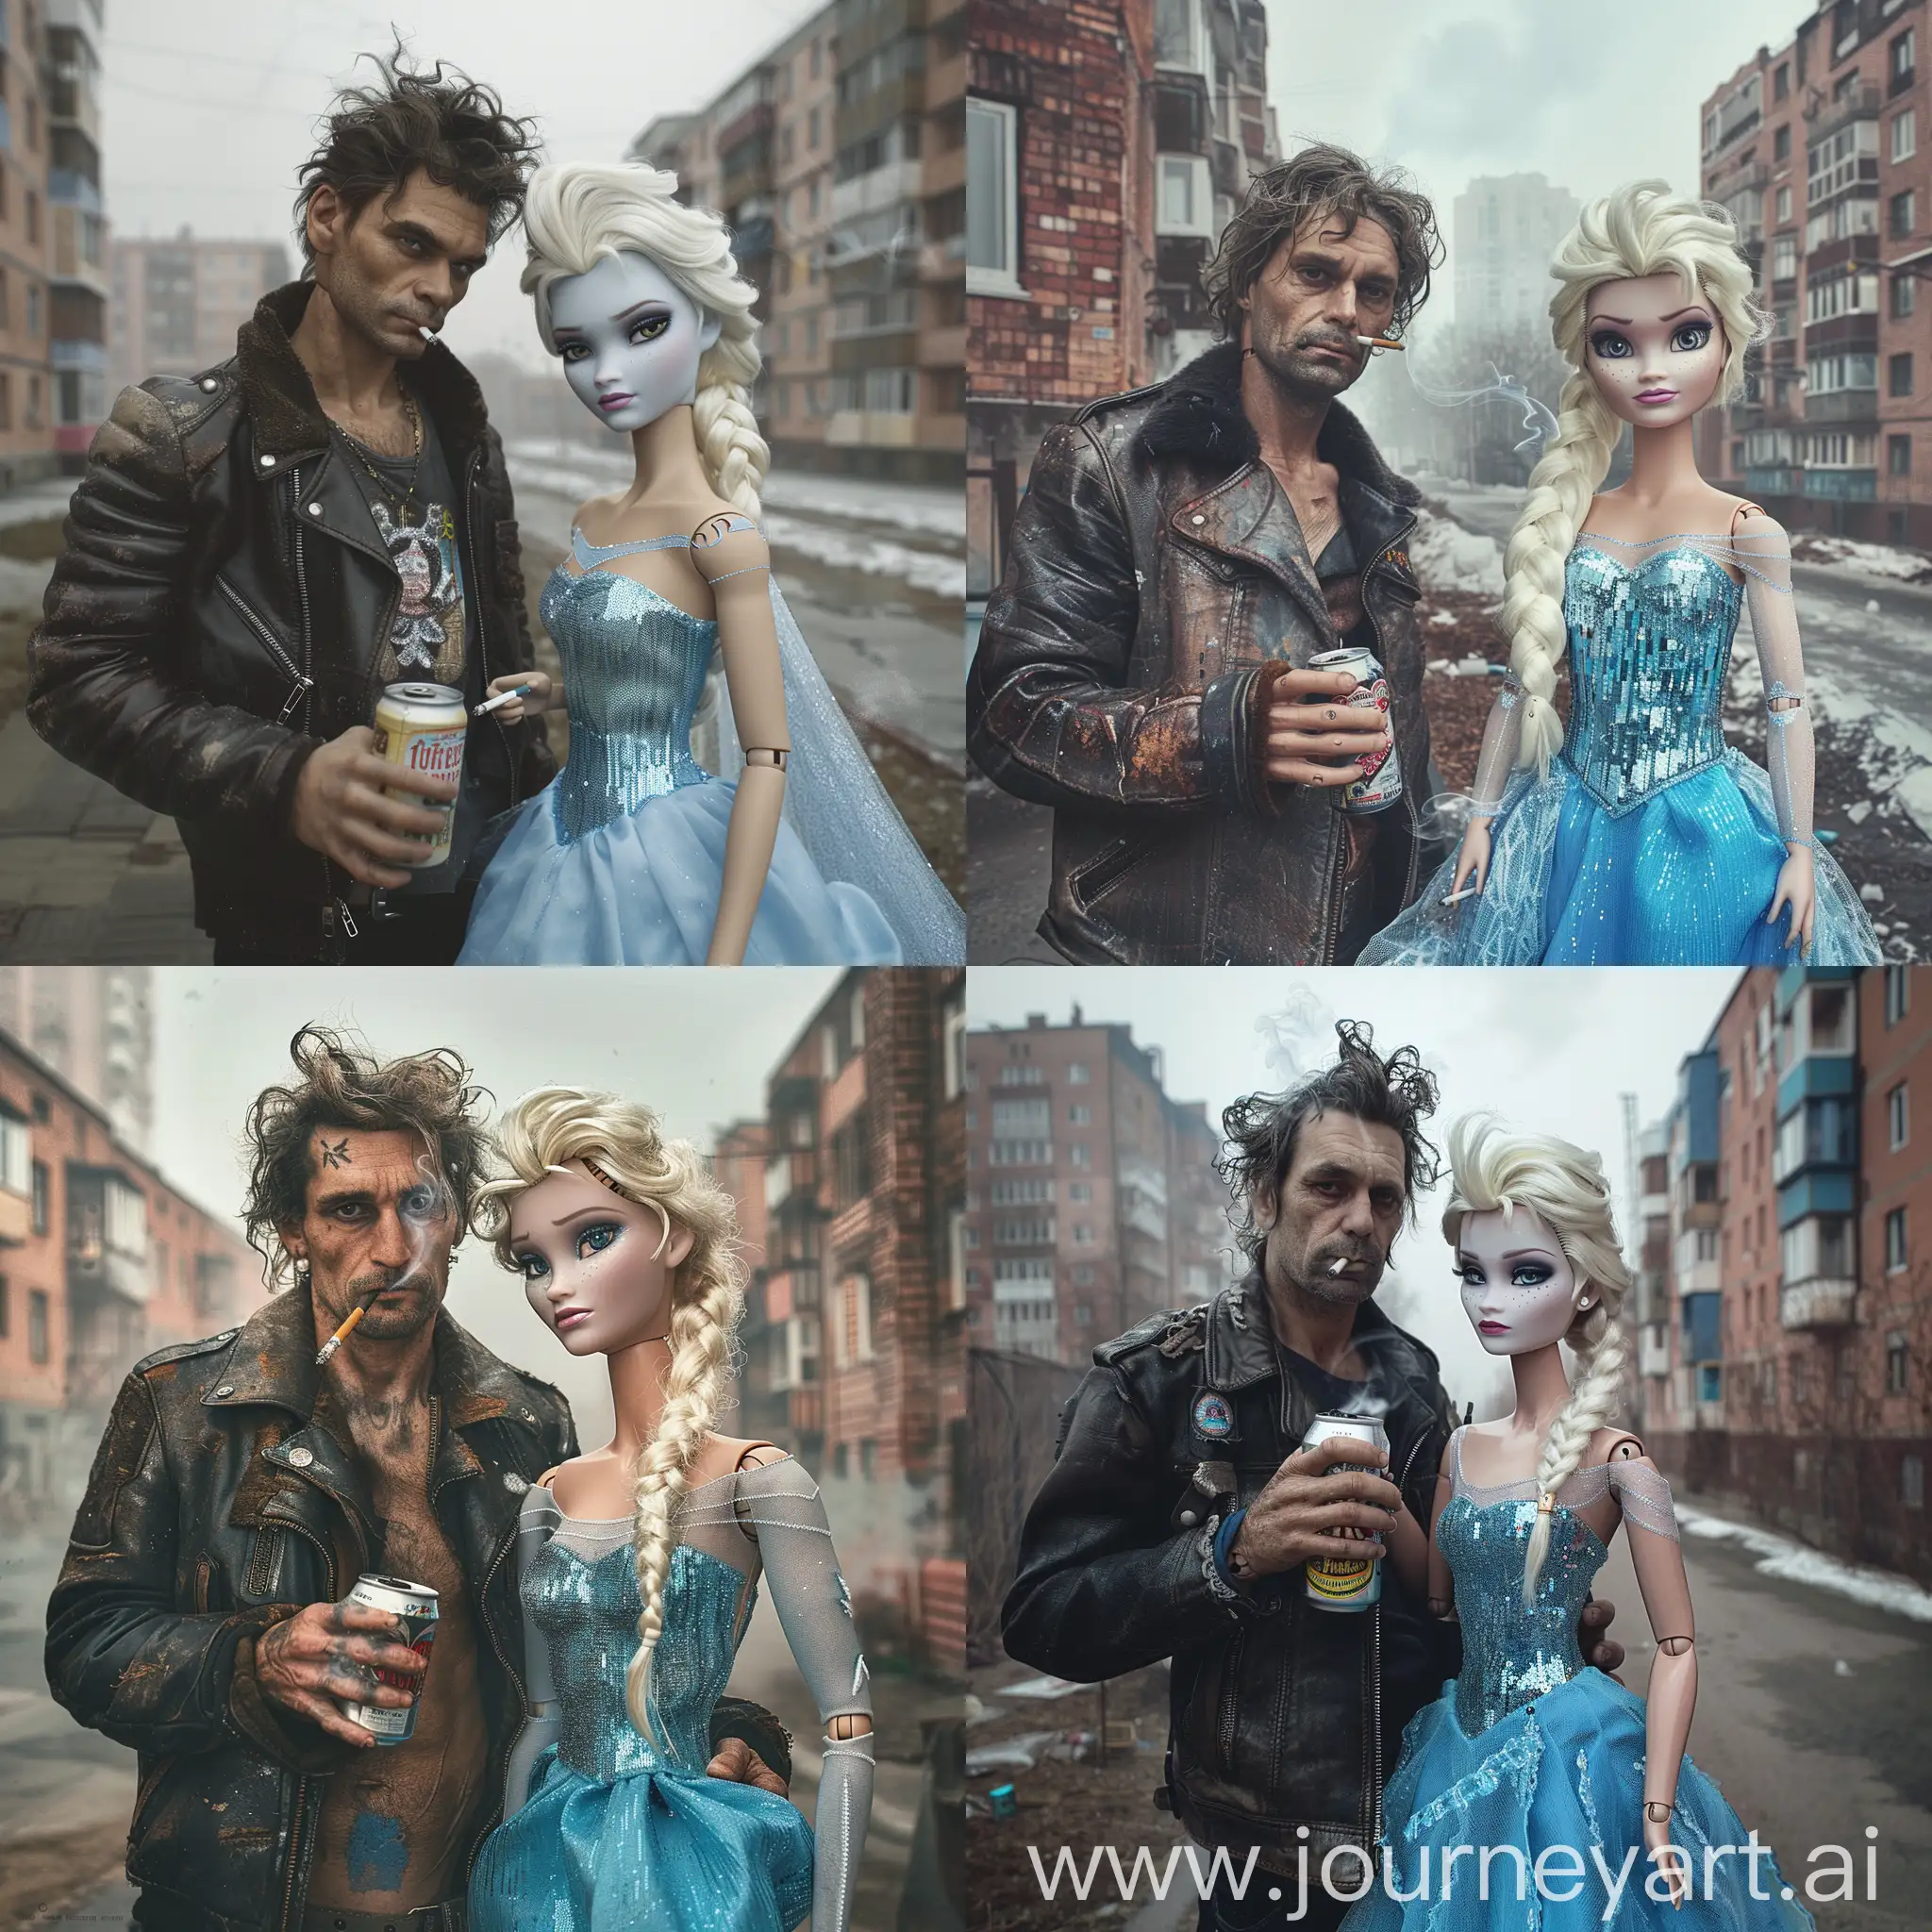 Rugged-Man-on-Foggy-Urban-Street-with-Surreal-Ice-Princess-Doll